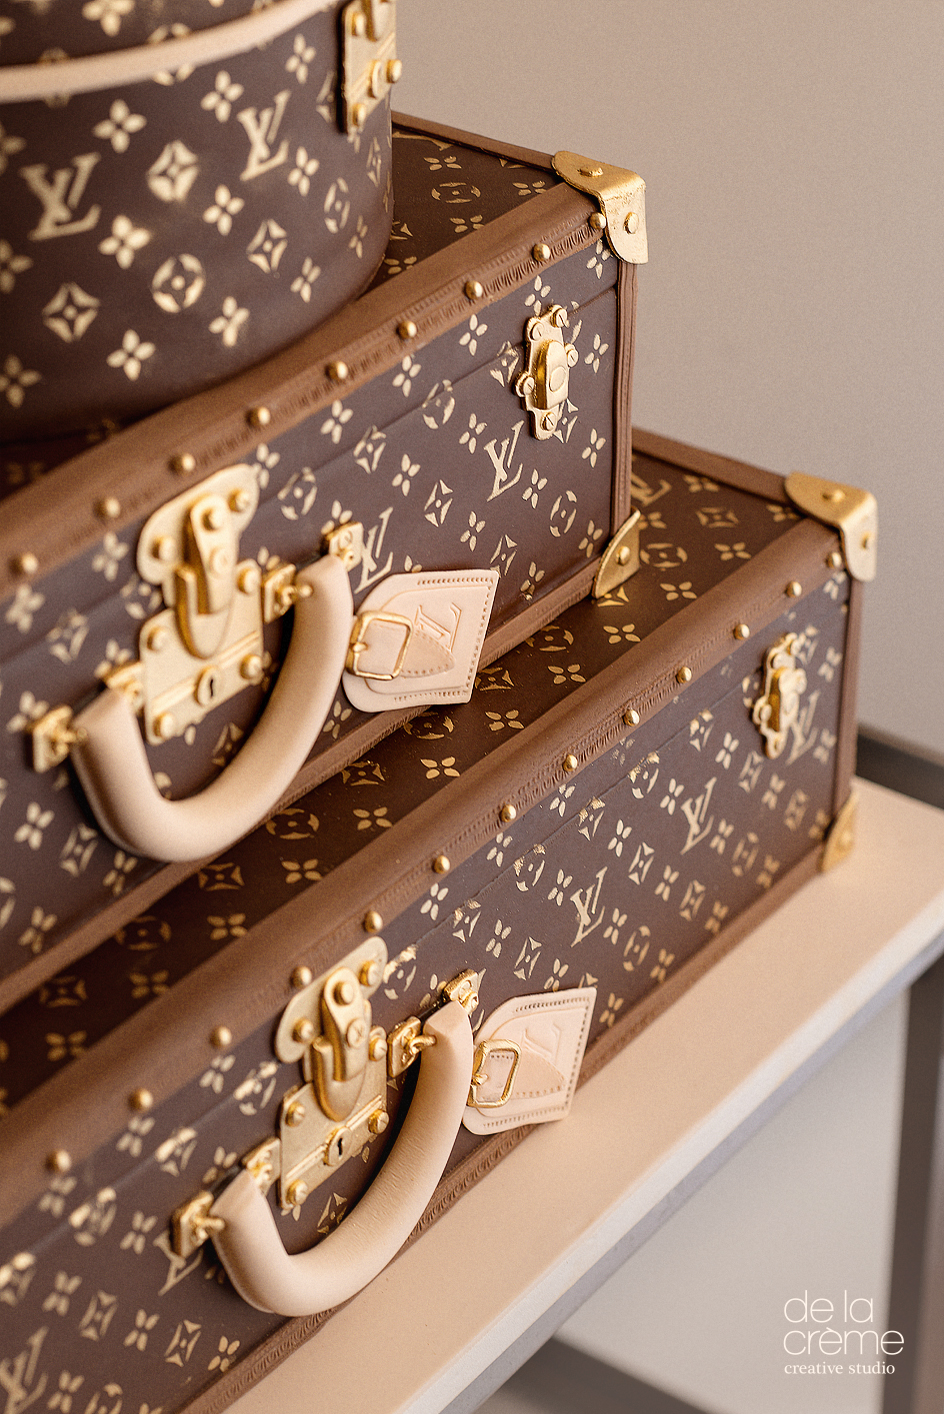 Louis Vuitton Creates Cake Trunk for Selfridges' Birthday